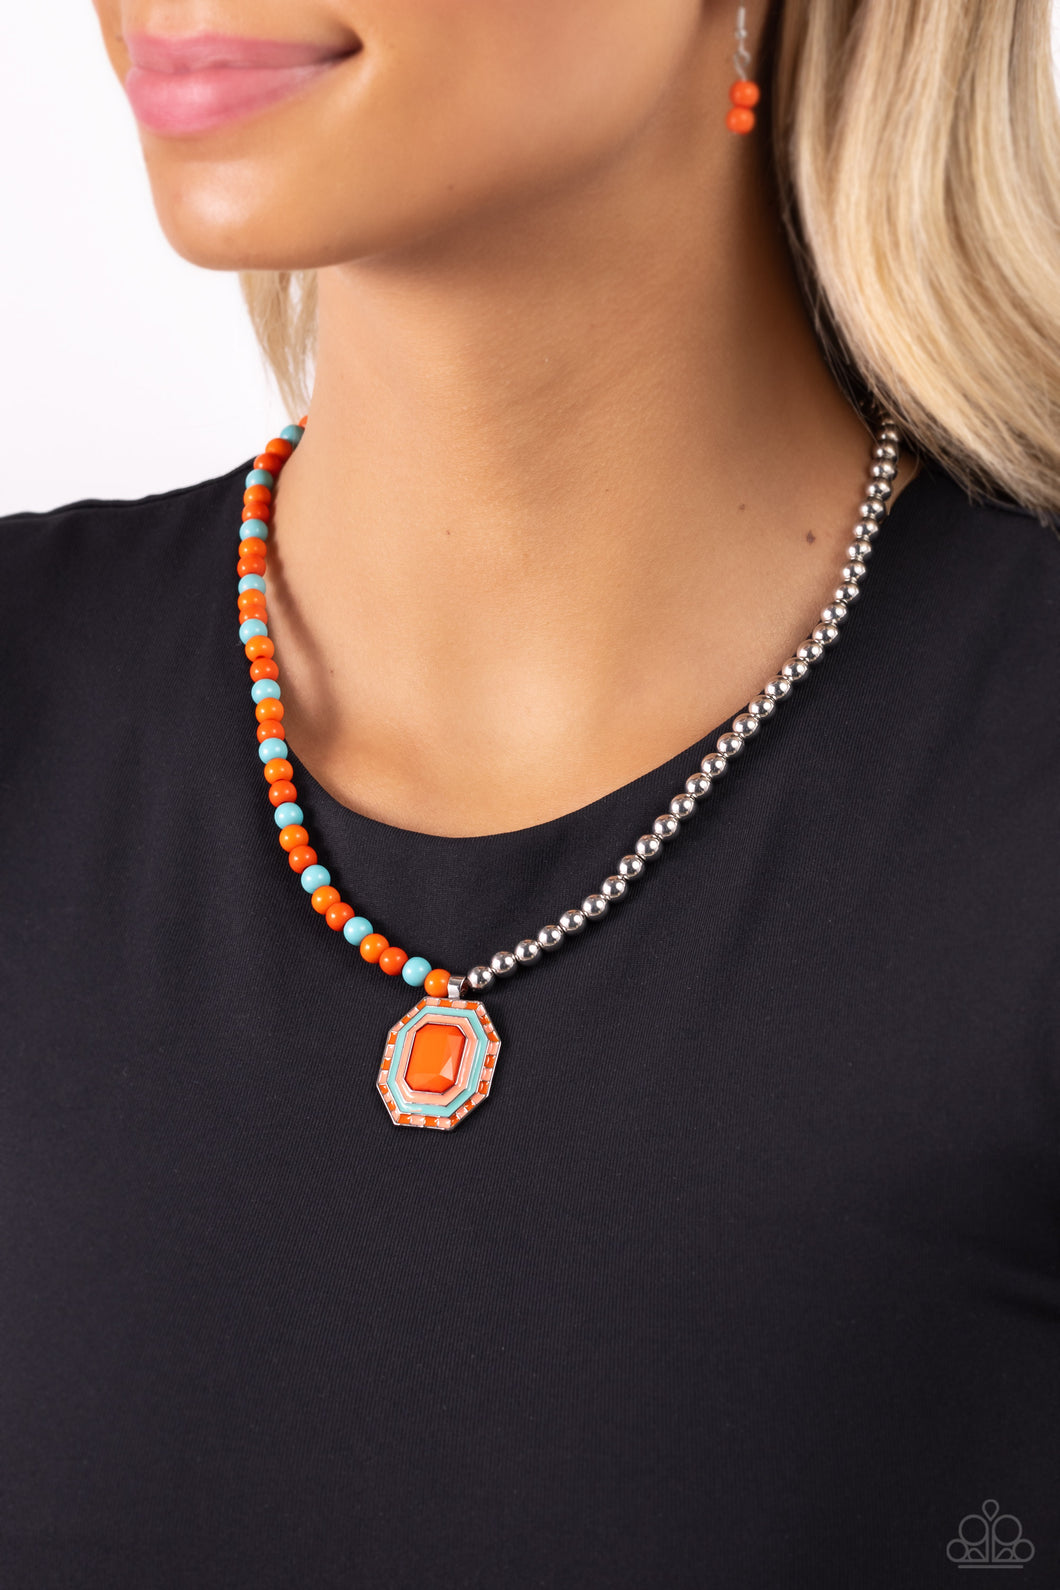 Paparazzi “Contrasting Candy” Orange Necklace Earring Set